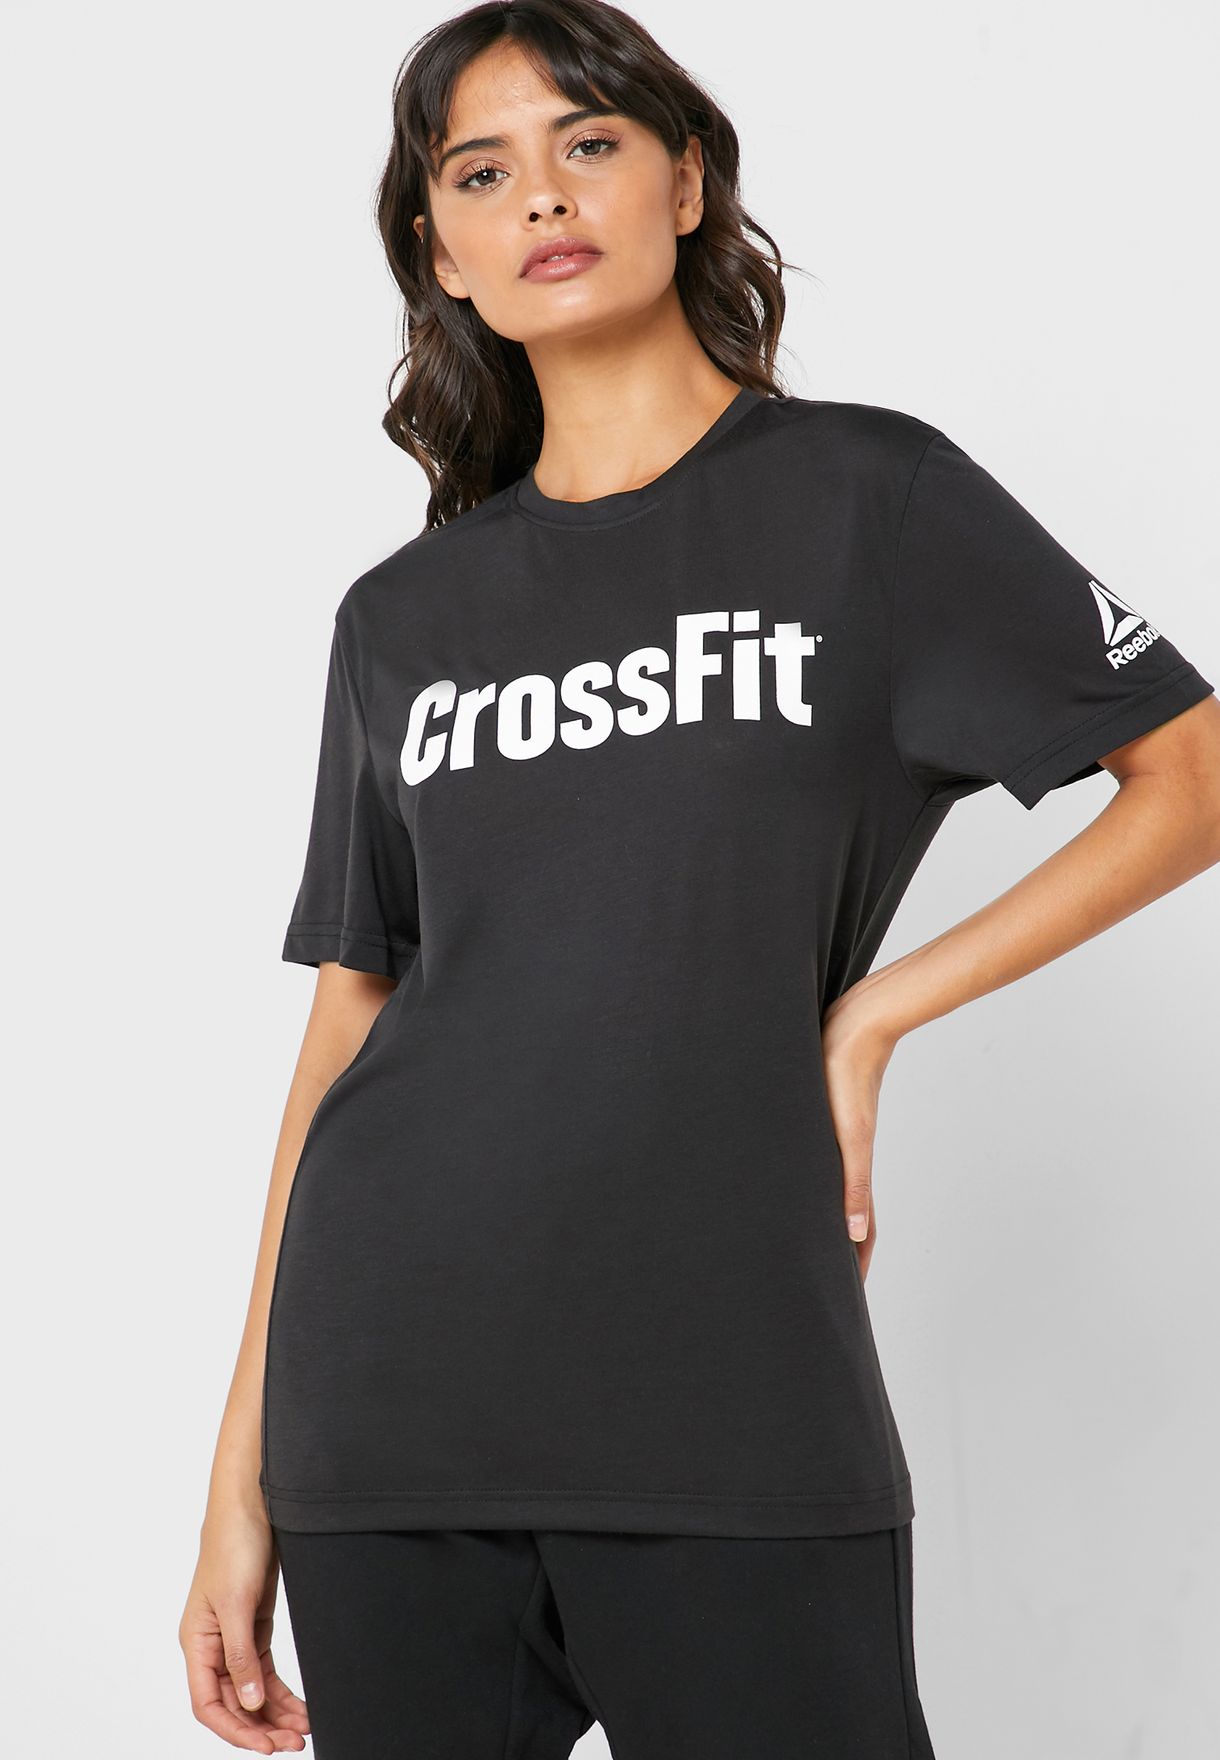 buy reebok crossfit t shirt